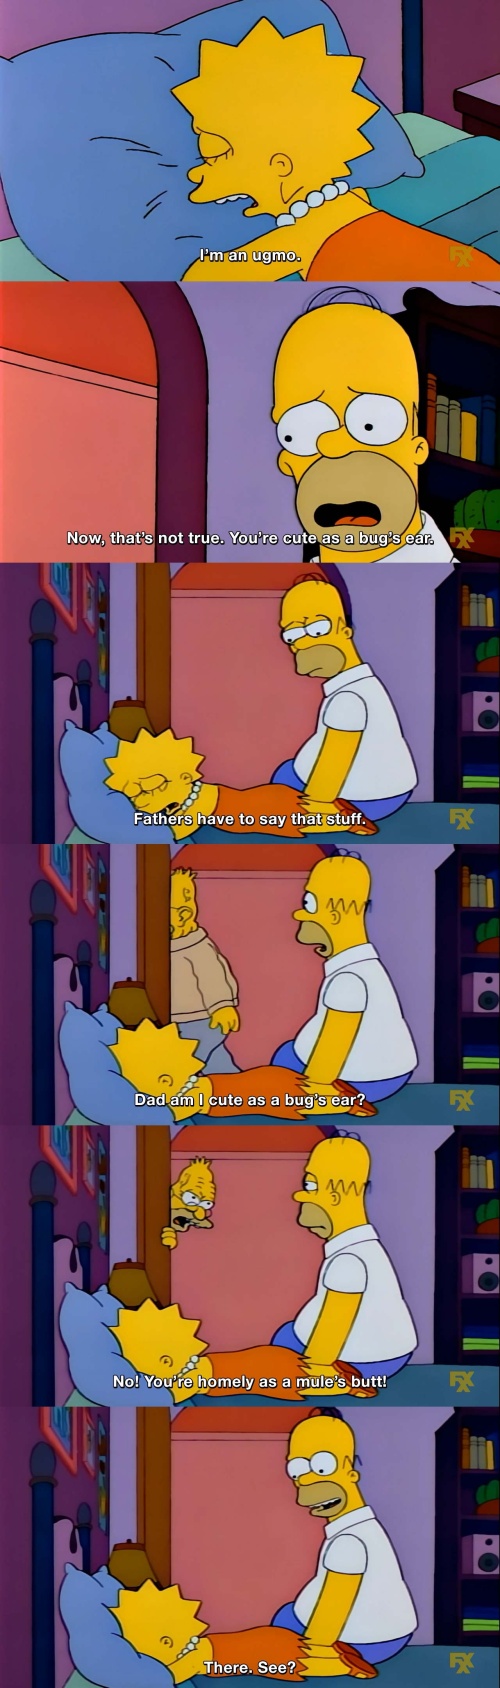 The Simpsons - I’m an ugmo